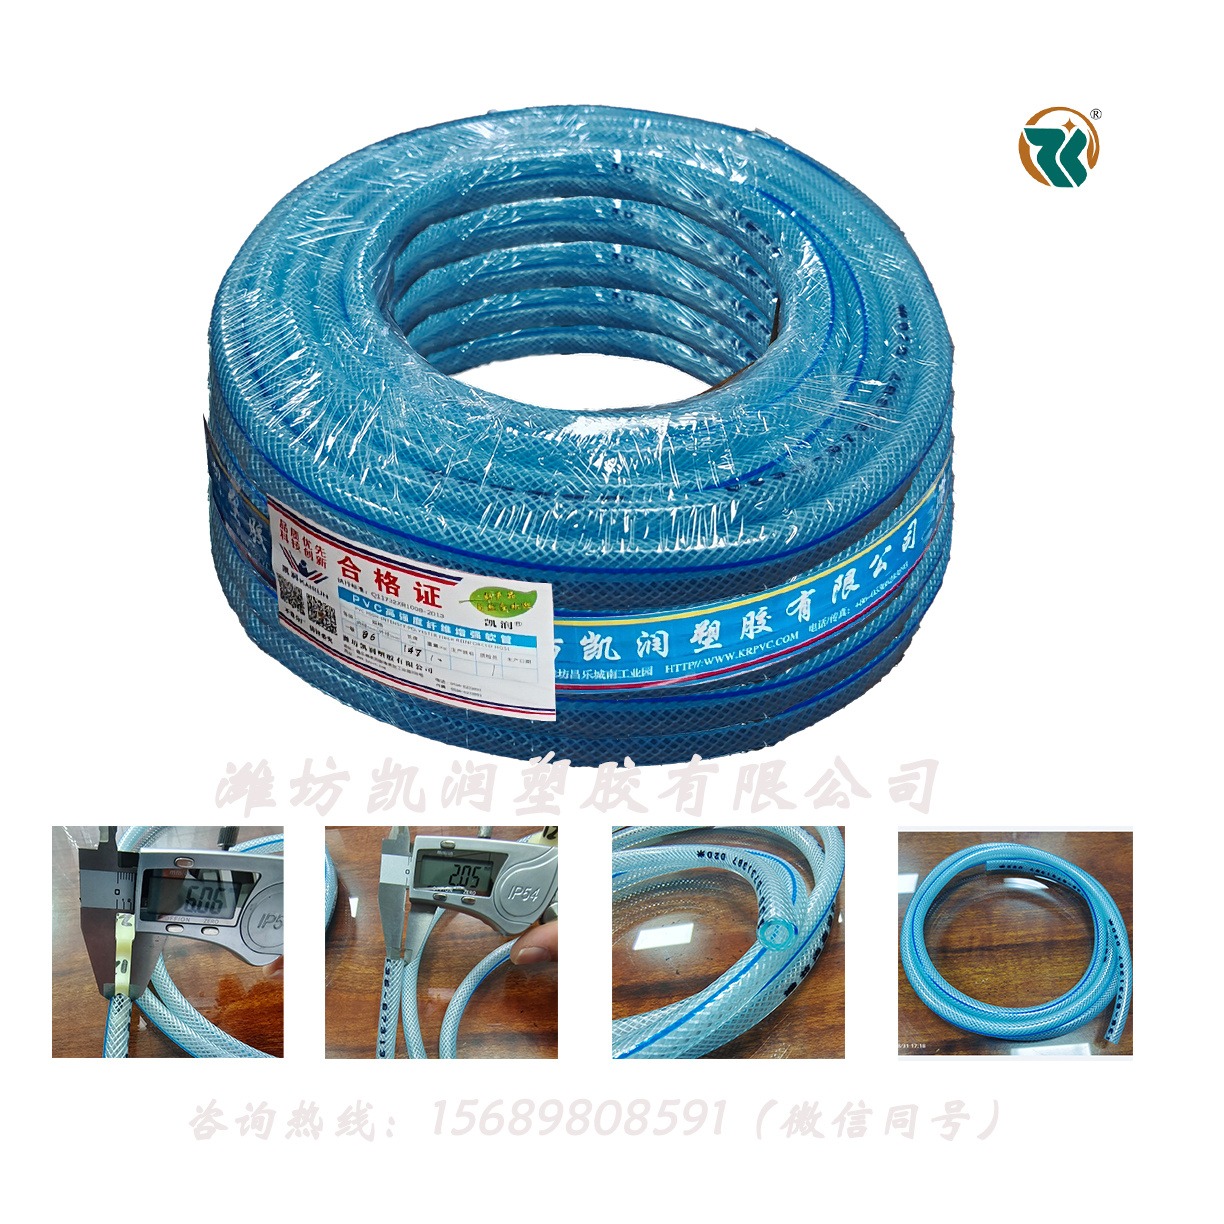 【6mm网管】中性 PVC纤维增强软管 机械配套 皮管 网纹管 耐用水管图片